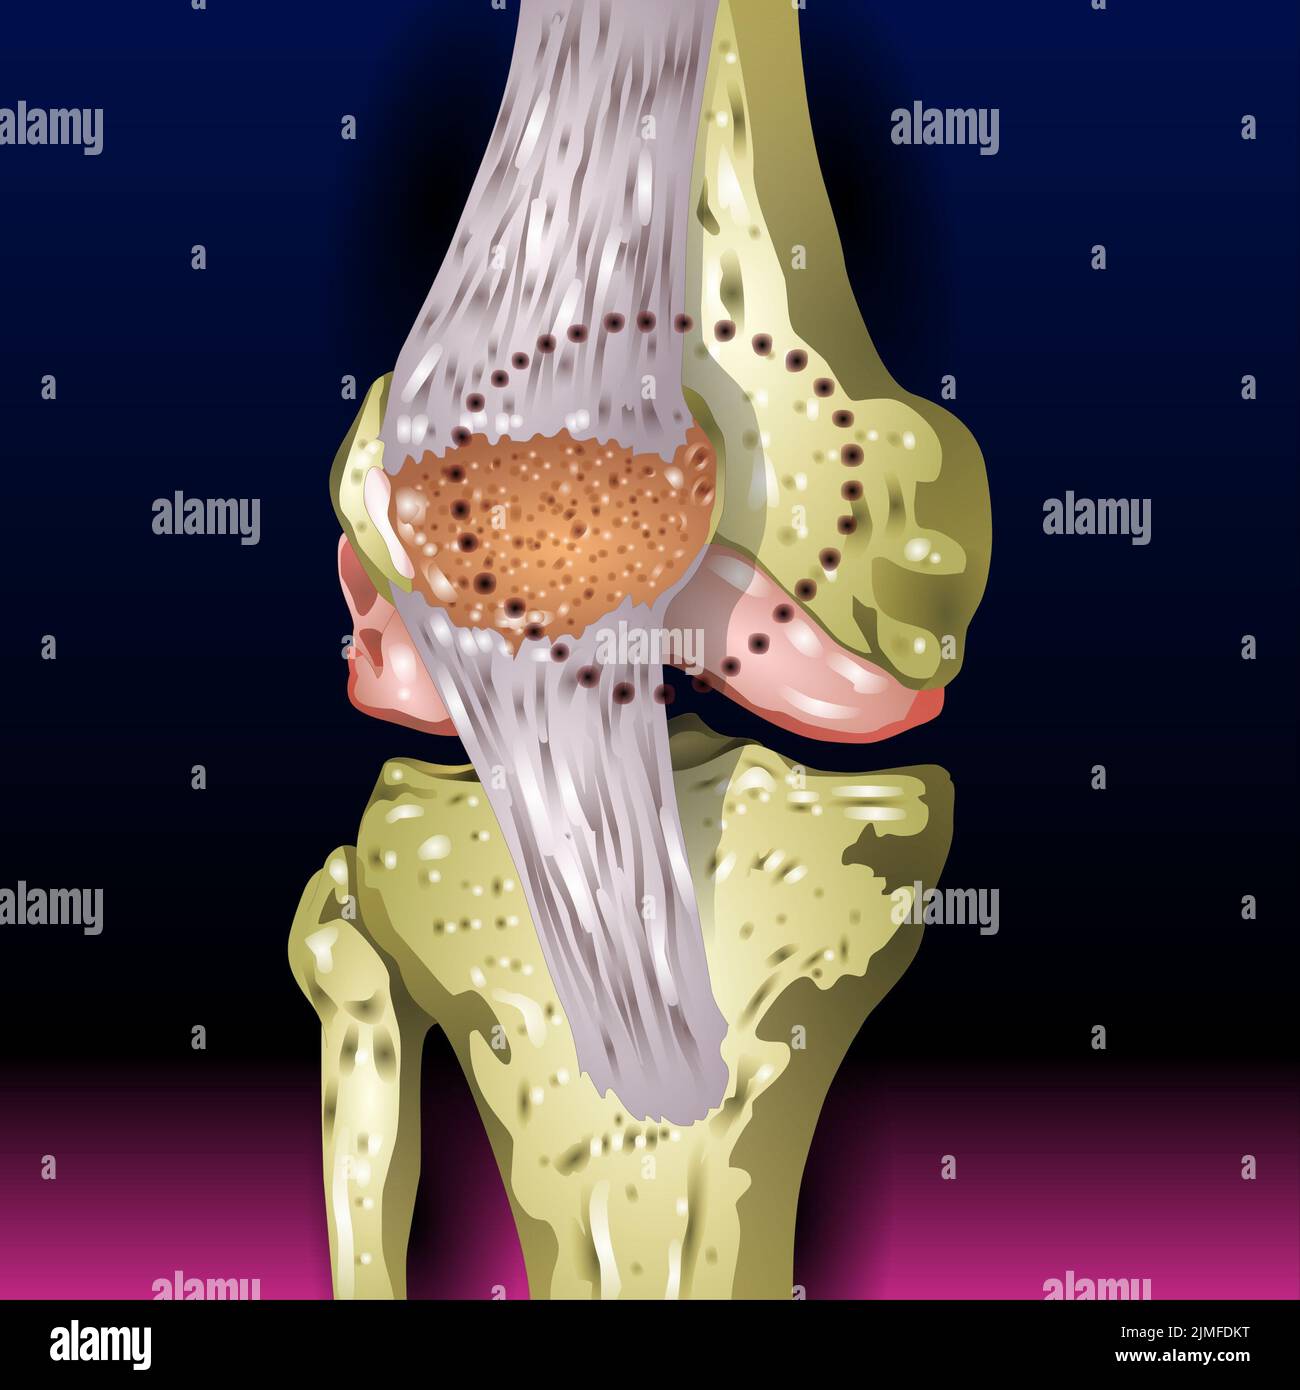 Bones Pain, Injury and Inflammation, Knee Joint Pain Silhouette Icon Ache of Knee, Leg Skeleton, Arthritis, Osteoporosis and Bones Joint, Illustration Stock Photo